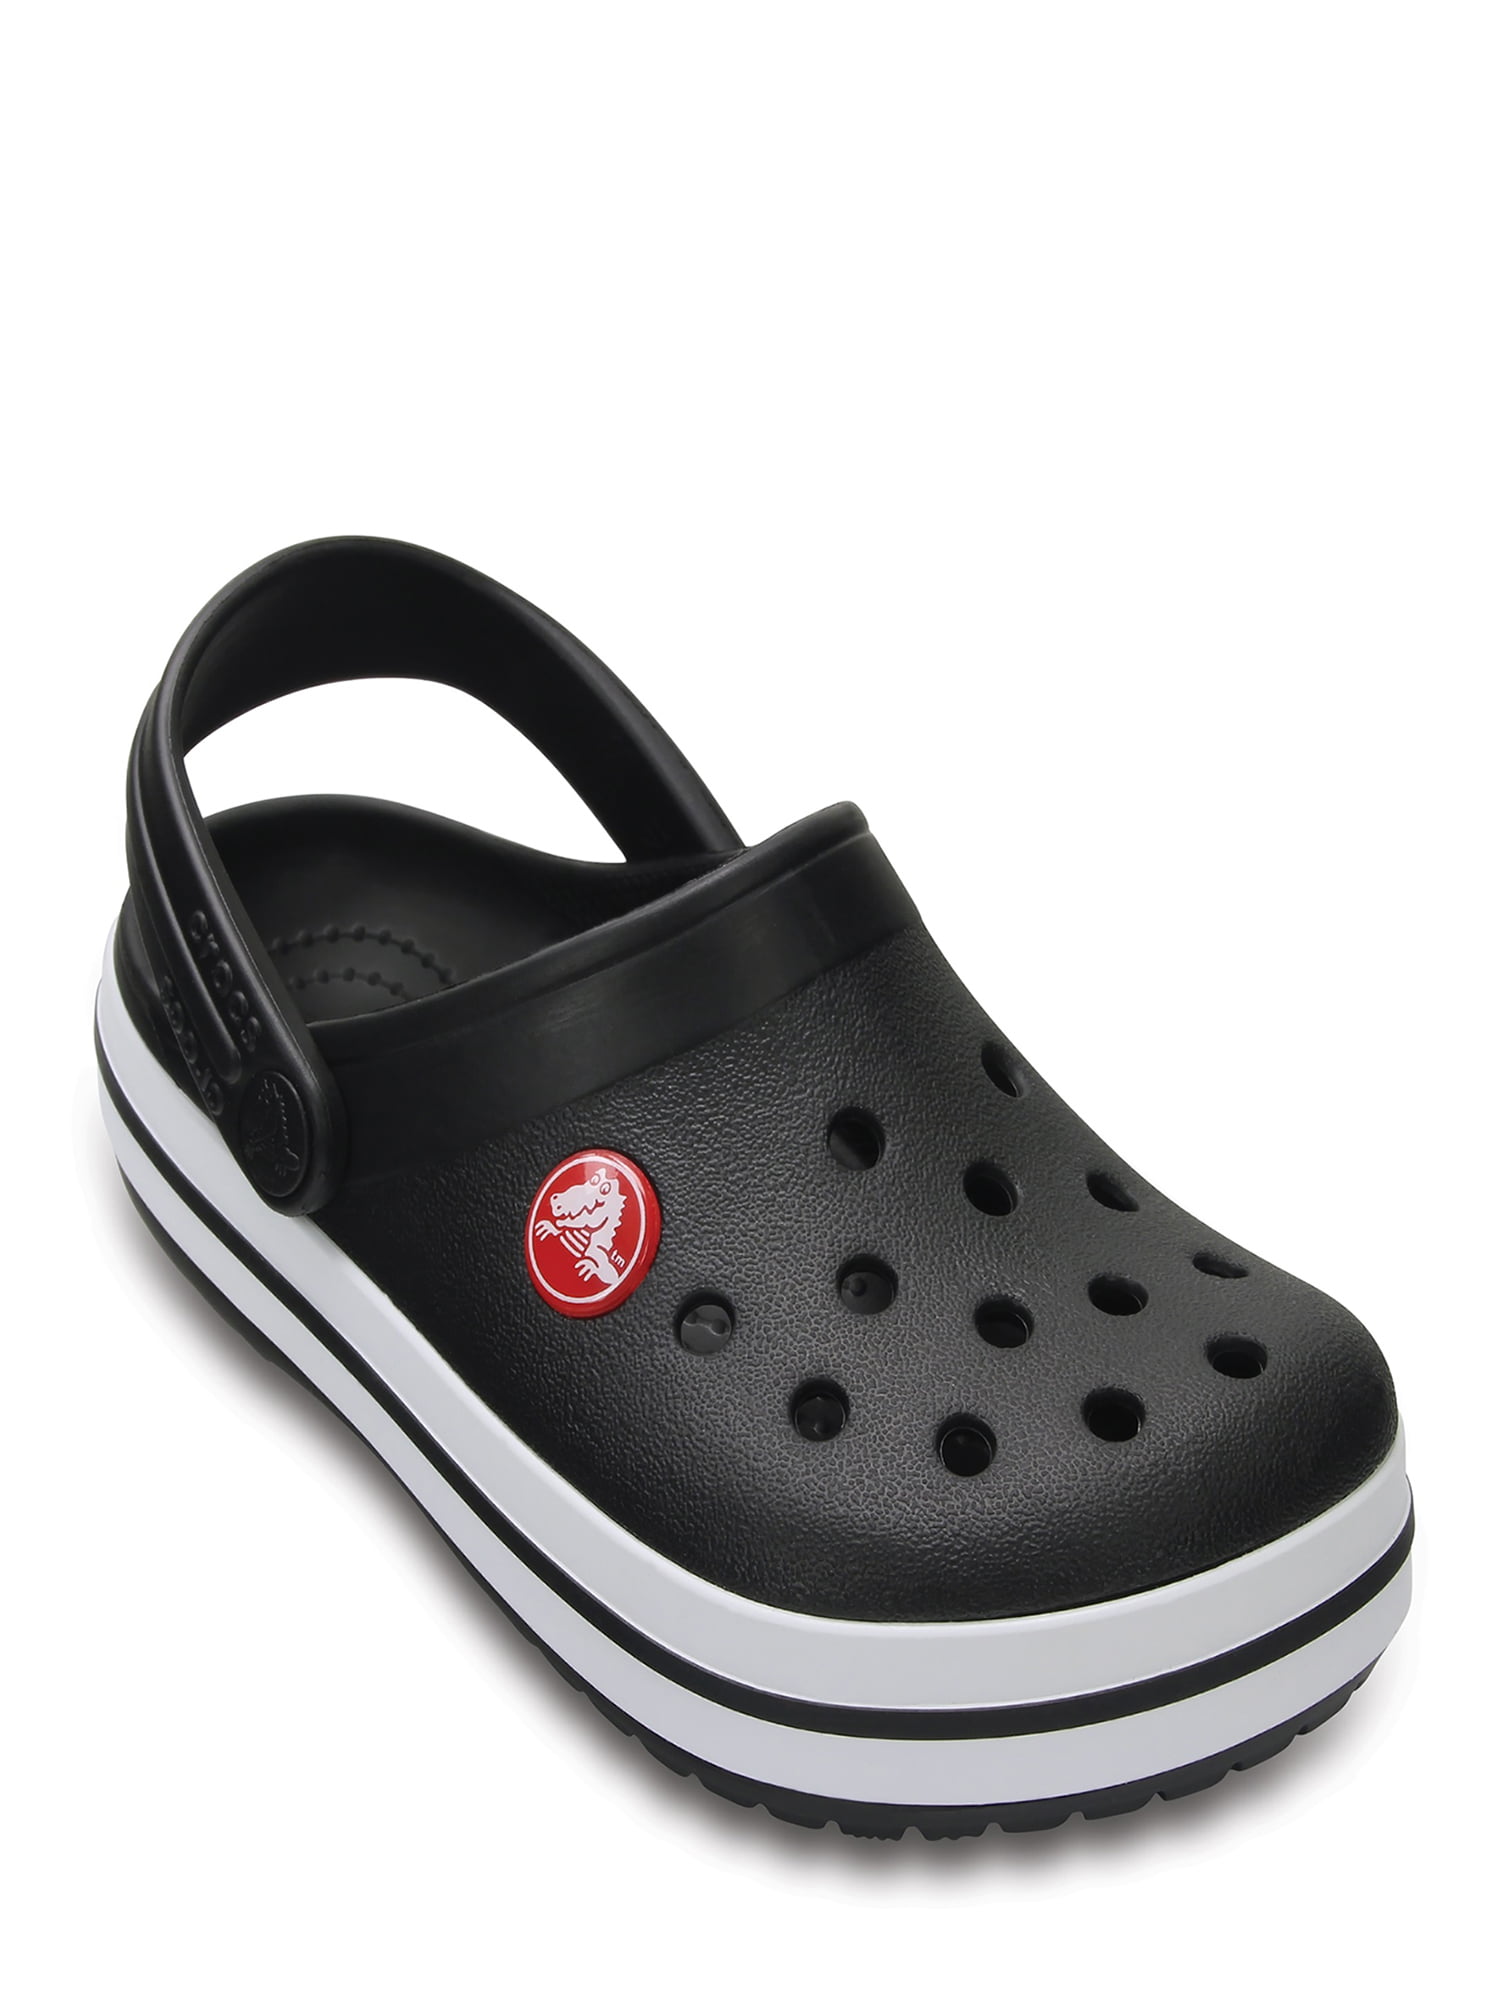 does walmart sell crocs shoes